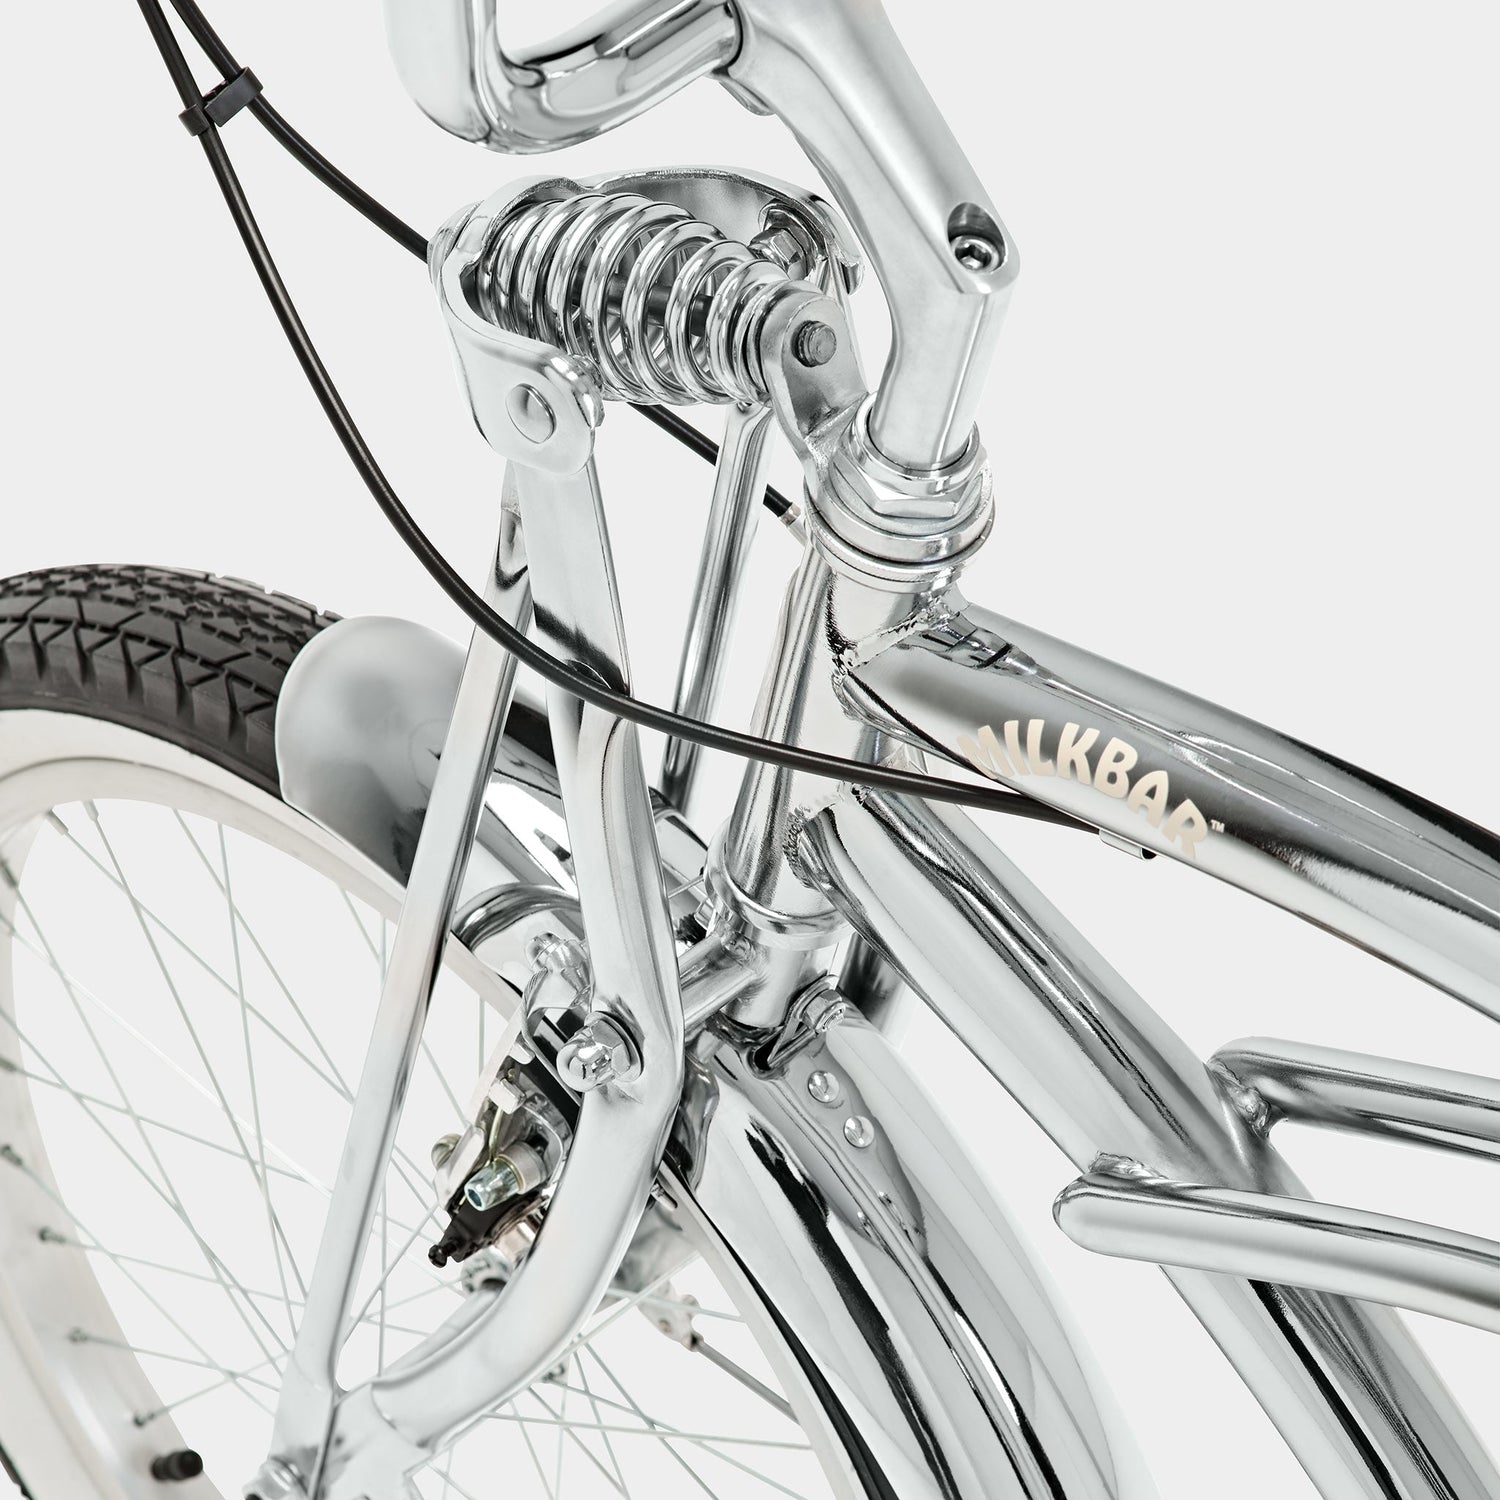 Front wheel detailing of the Milkbar Bikes Sugar High 20" - Icy Chrome